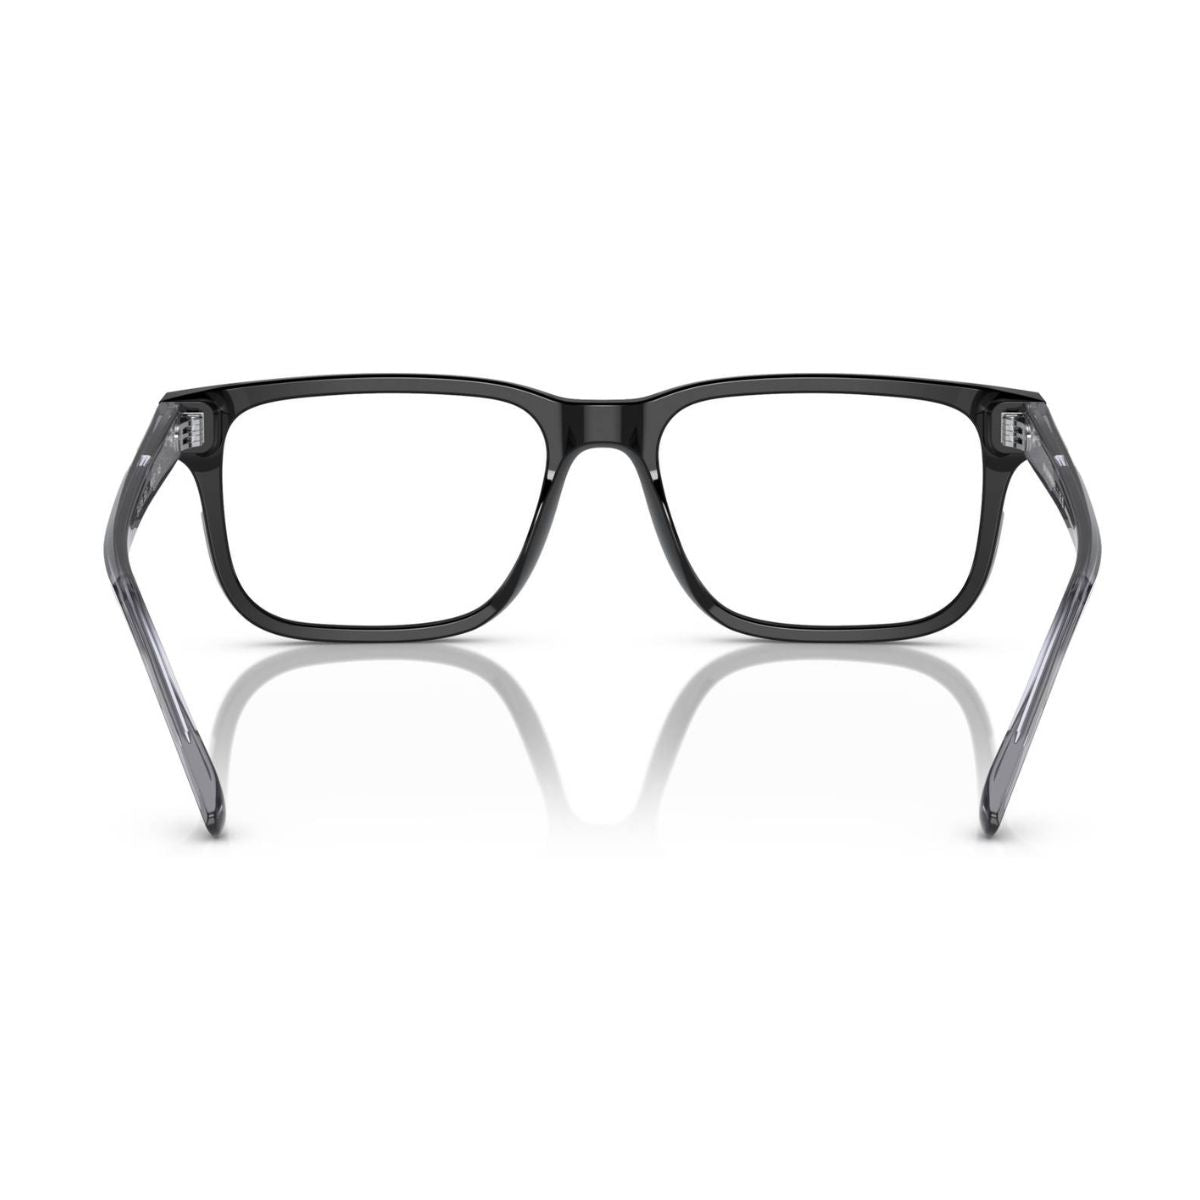 "Emporio Armani 3218 5017 Prescription Glasses Frame For Men's At Optorium"